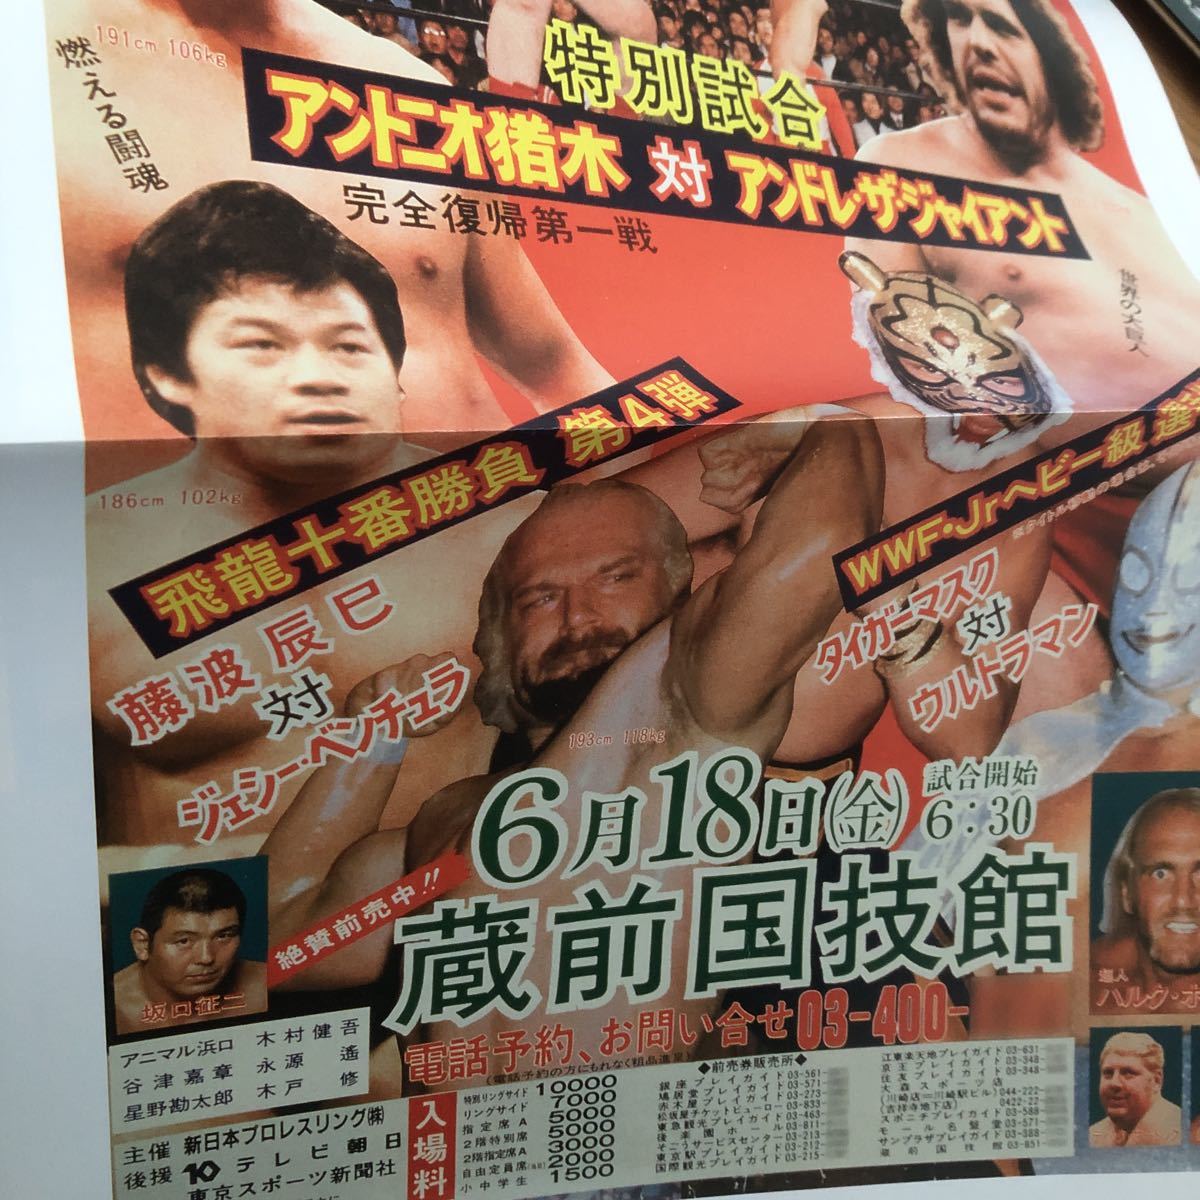  гореть . New Japan Professional Wrestling Tiger Mask ruchiya. праздник .